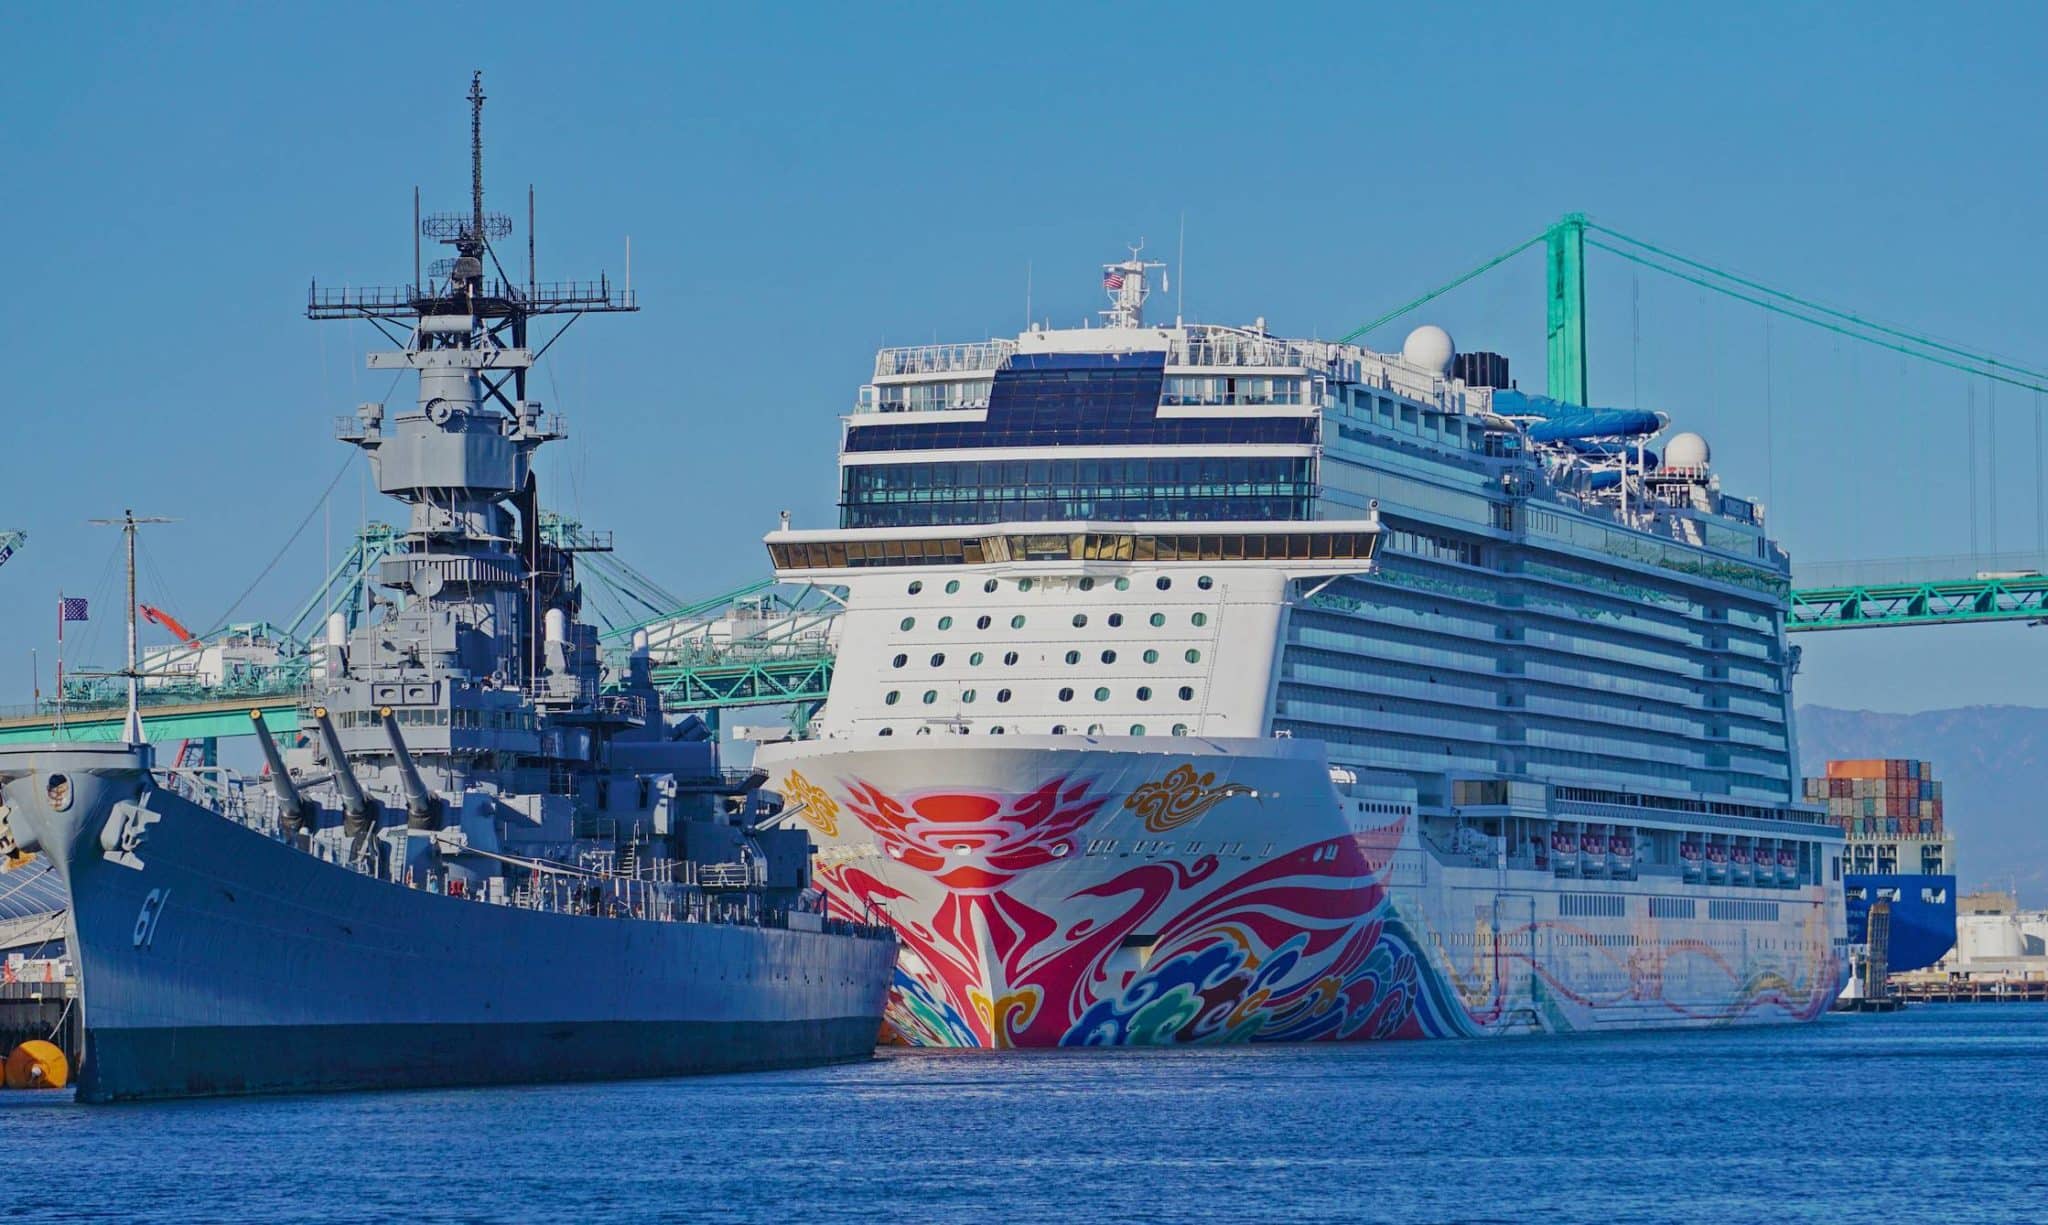 LA cruise port with Norwegian cruise ship